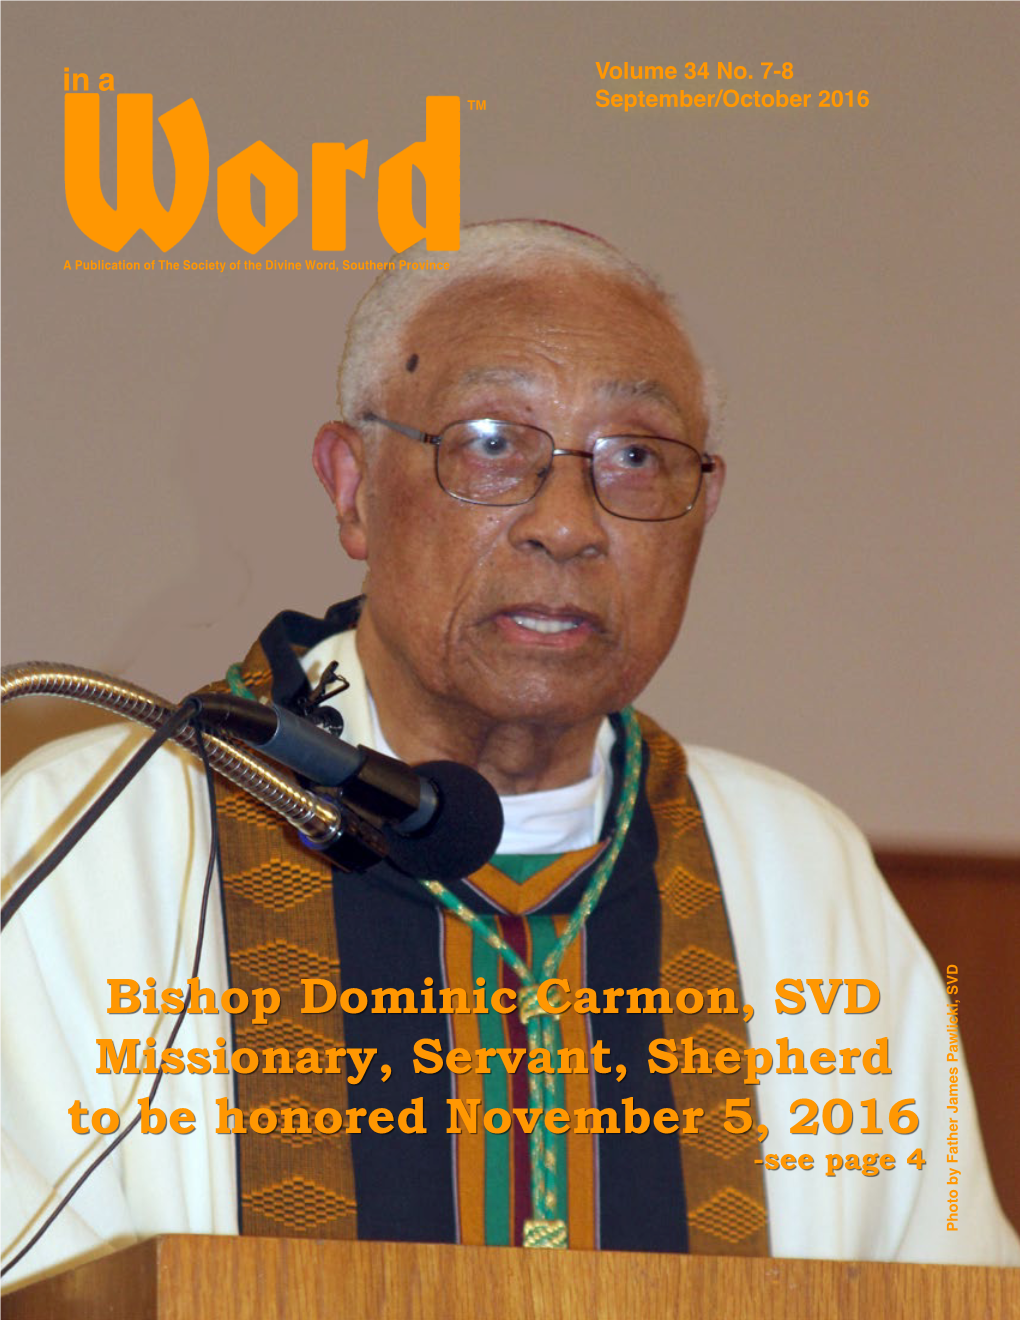 Bishop Dominic Carmon, SVD Missionary, Servant, Shepherd To